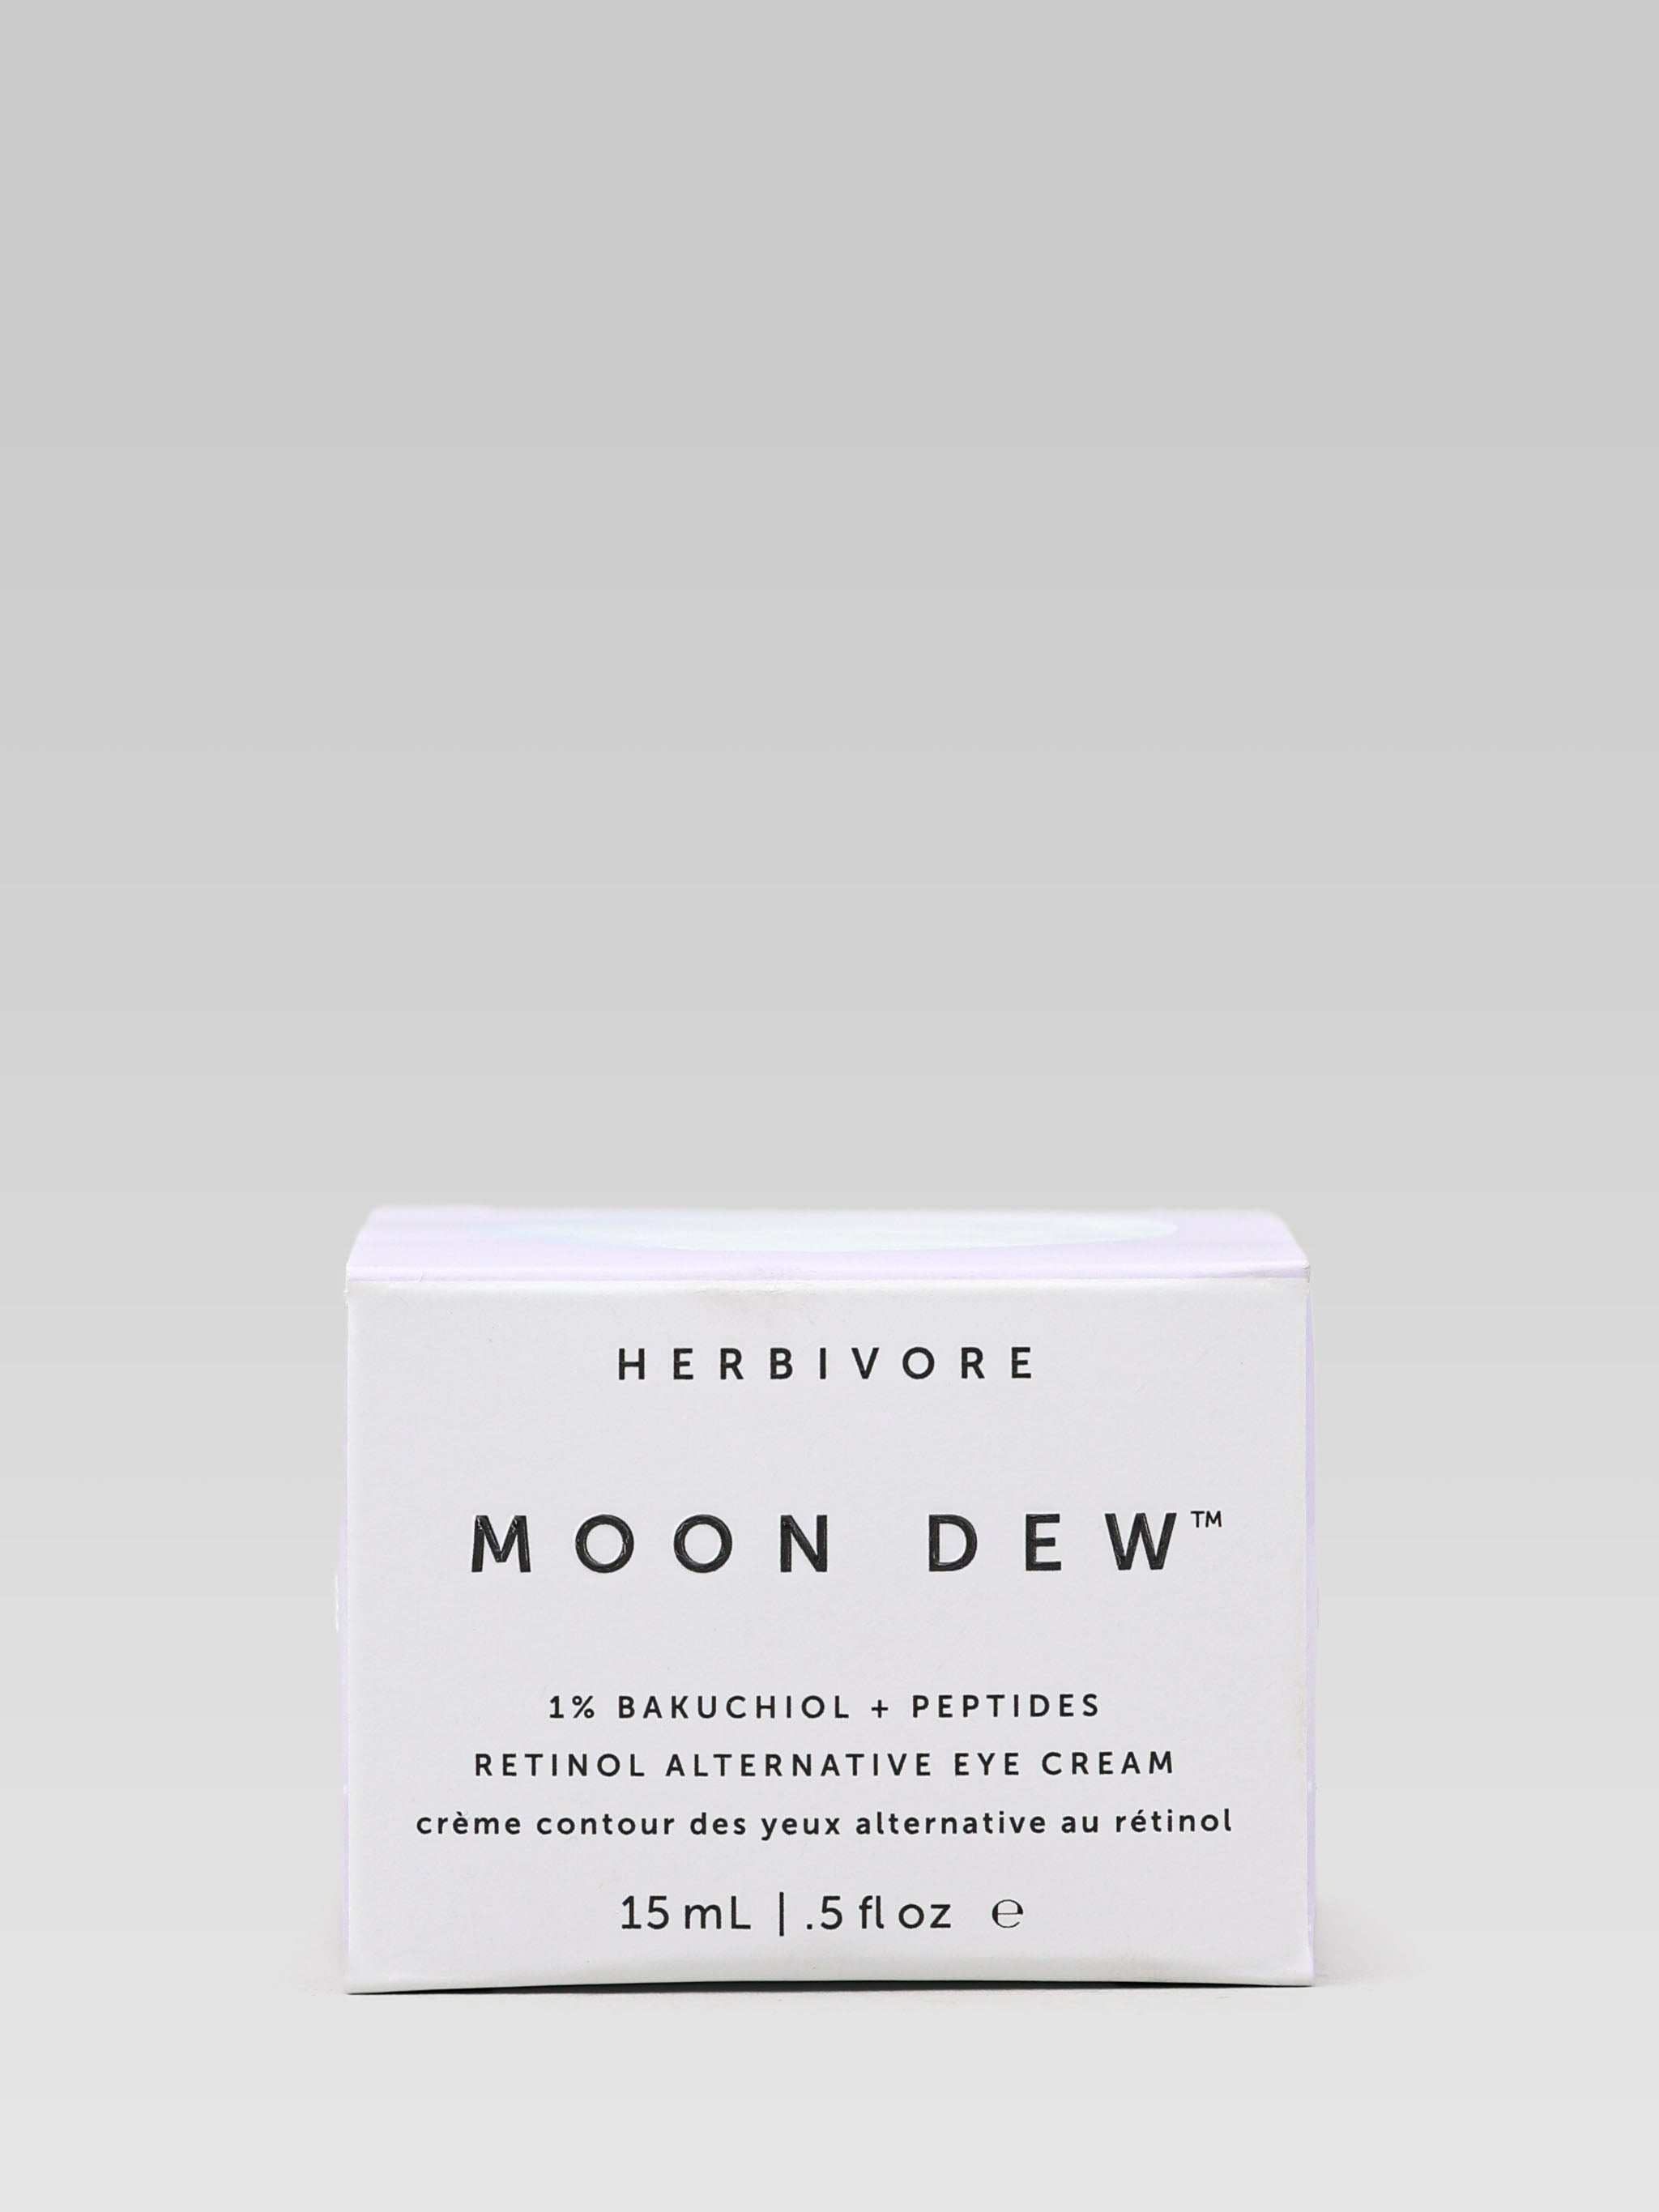 HERBIVORE BOTANICALS Moon Dew Eye Cream product packaging 